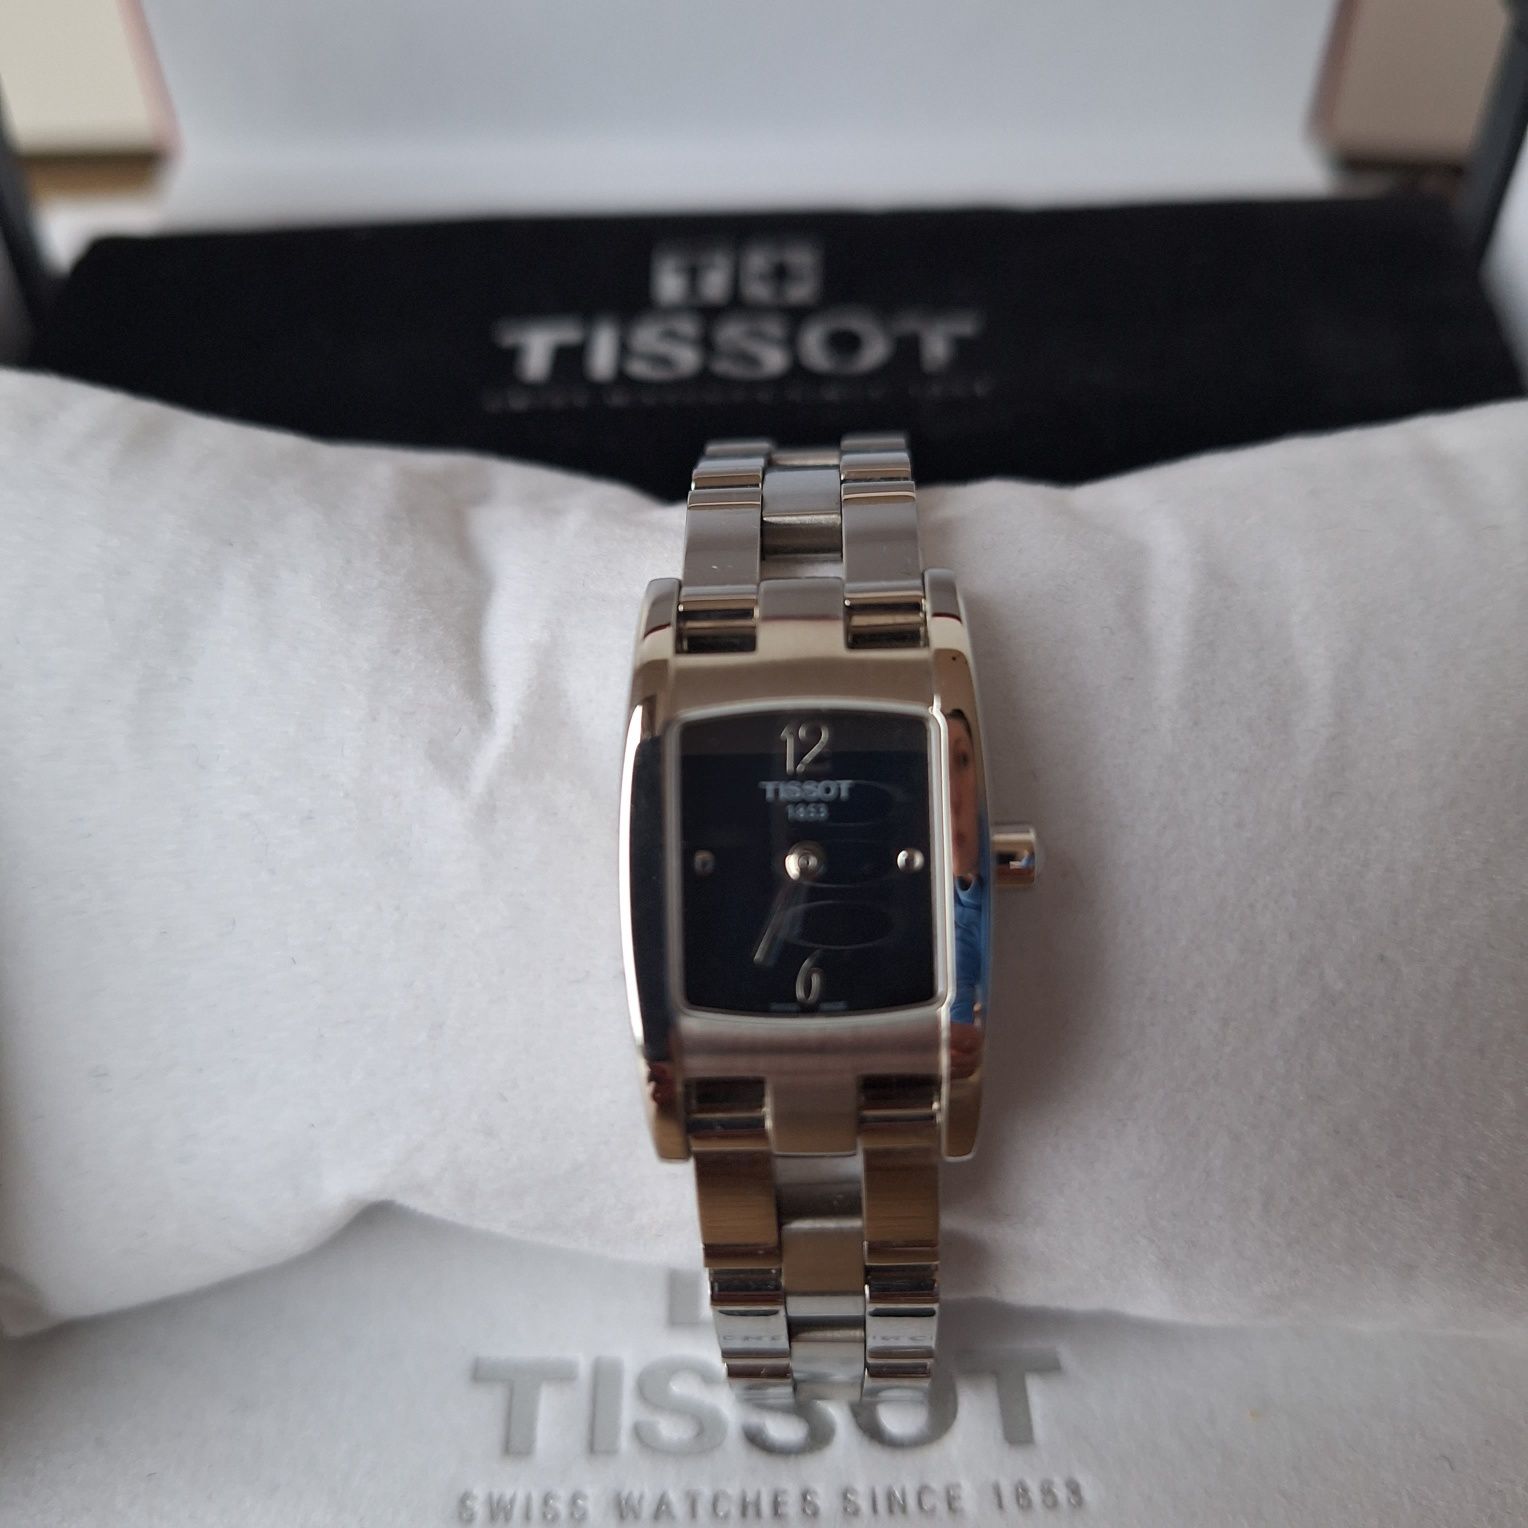 Zegarek Tissot damski jak nowy Unikat